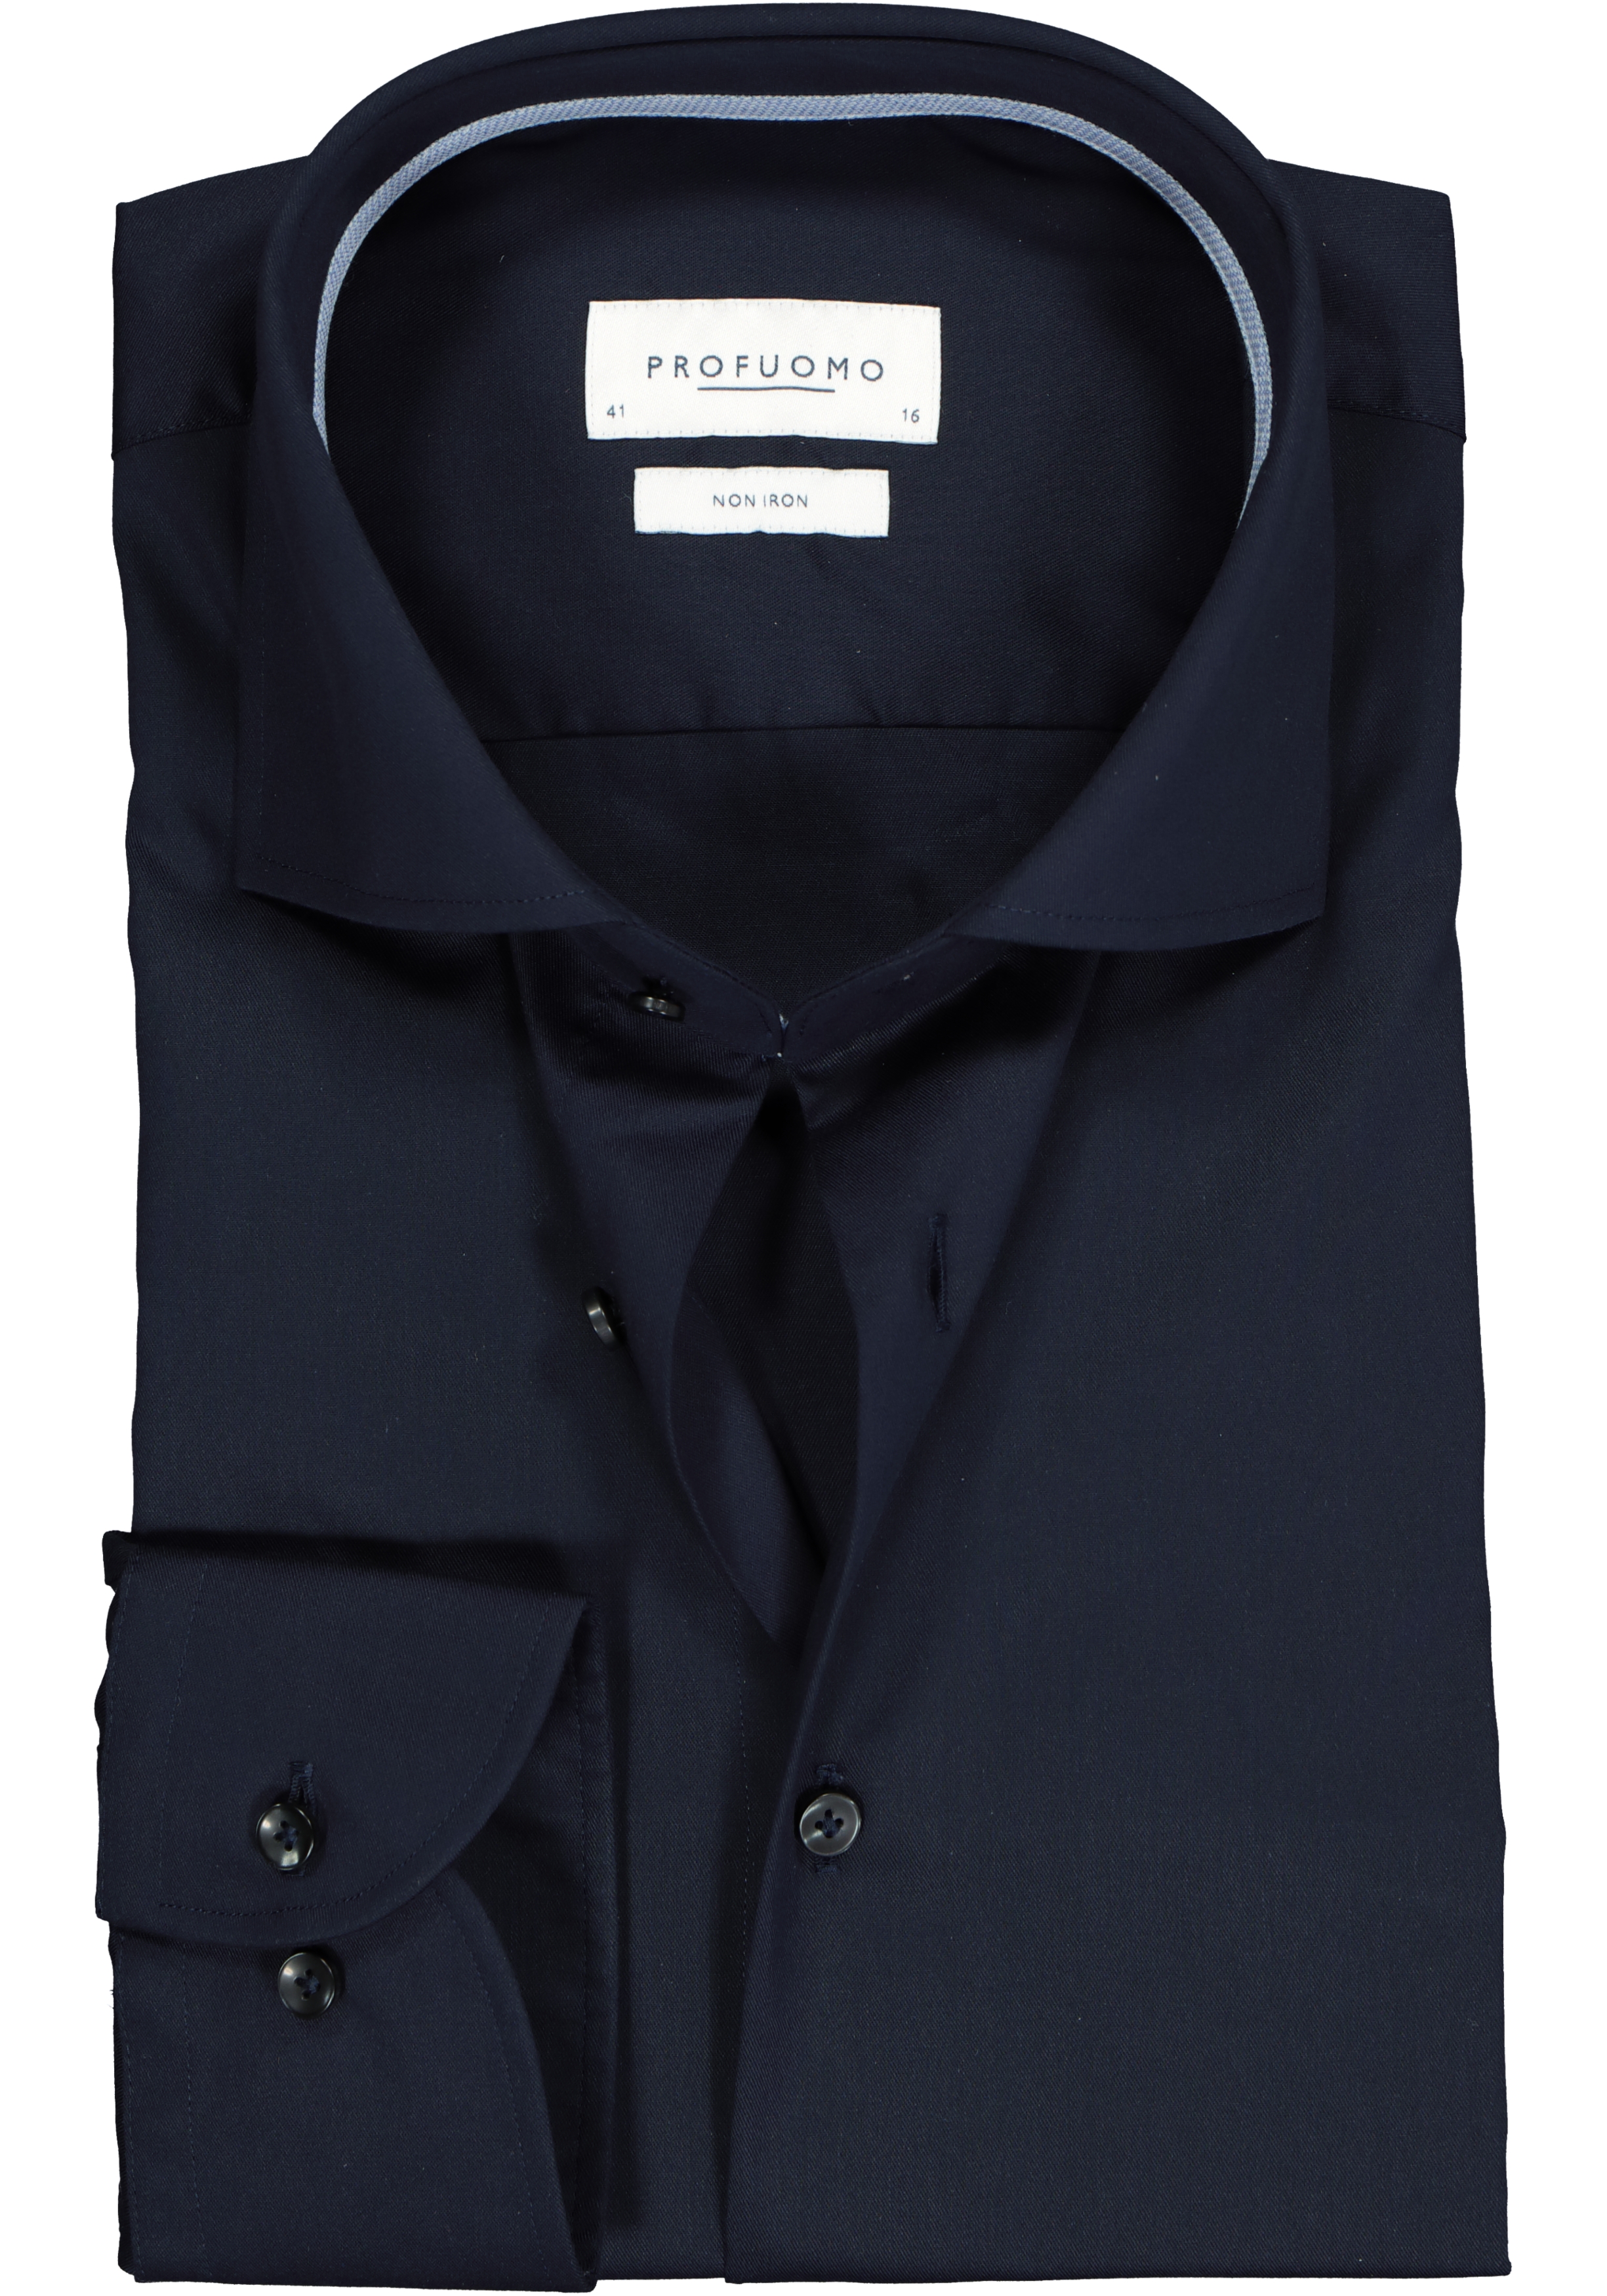 Profuomo slim fit overhemd, twill, navy blauw (contrast)